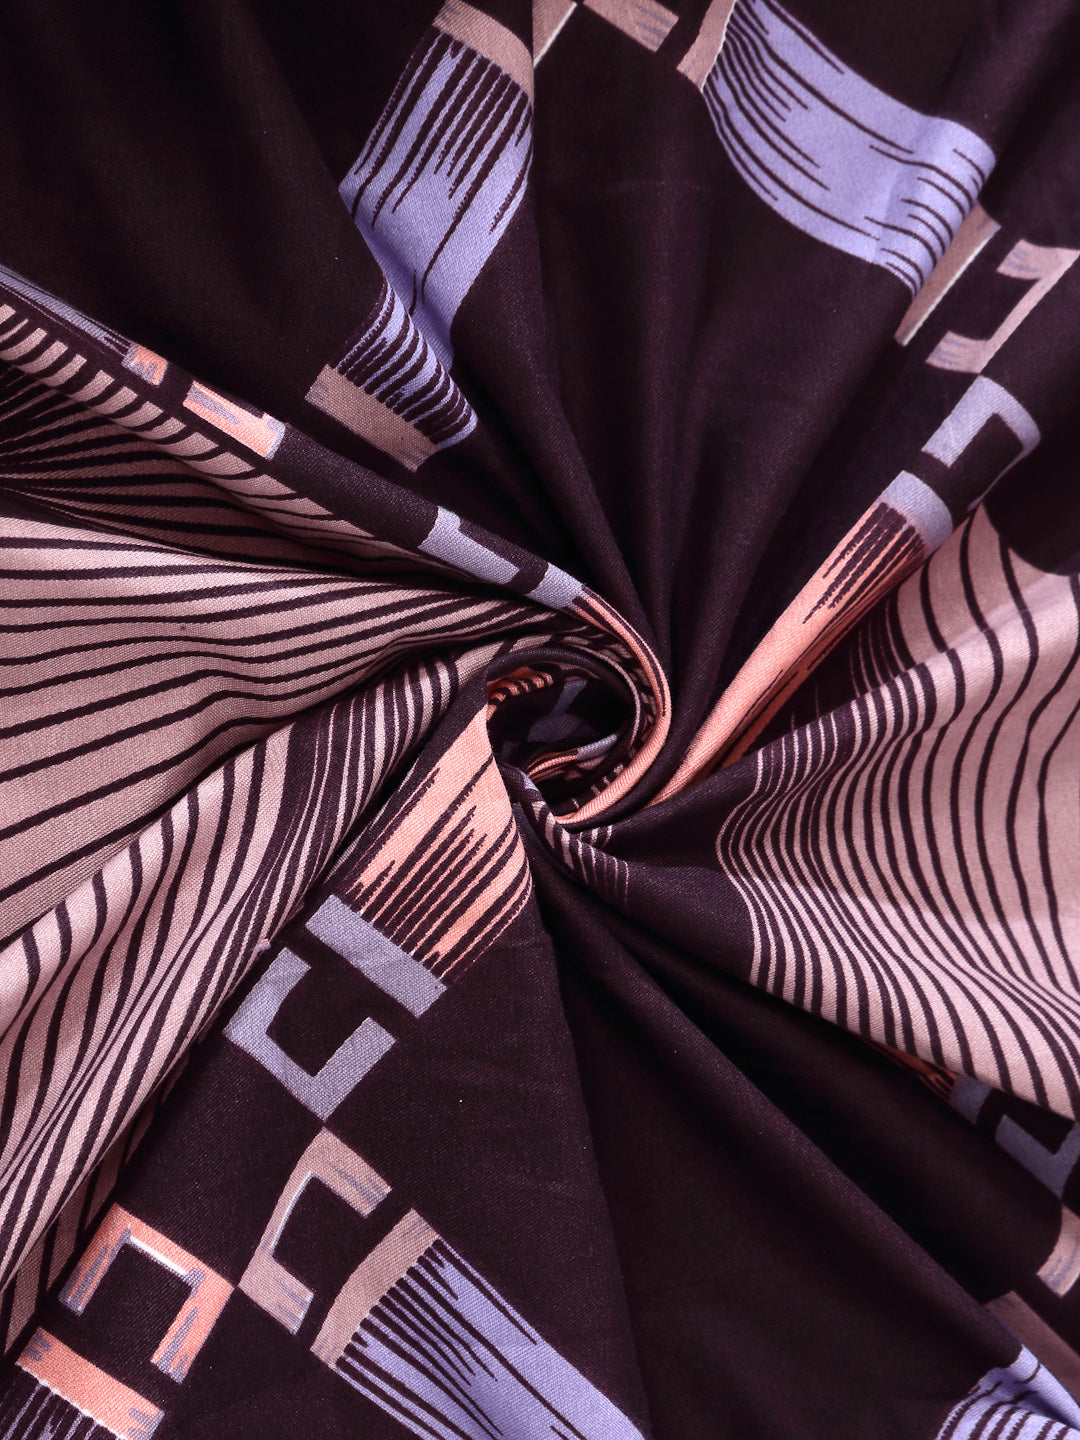 Arrabi Brown Geometric TC Cotton Blend King Size Bedsheet with 2 Pillow Covers (250 X 220 cm)